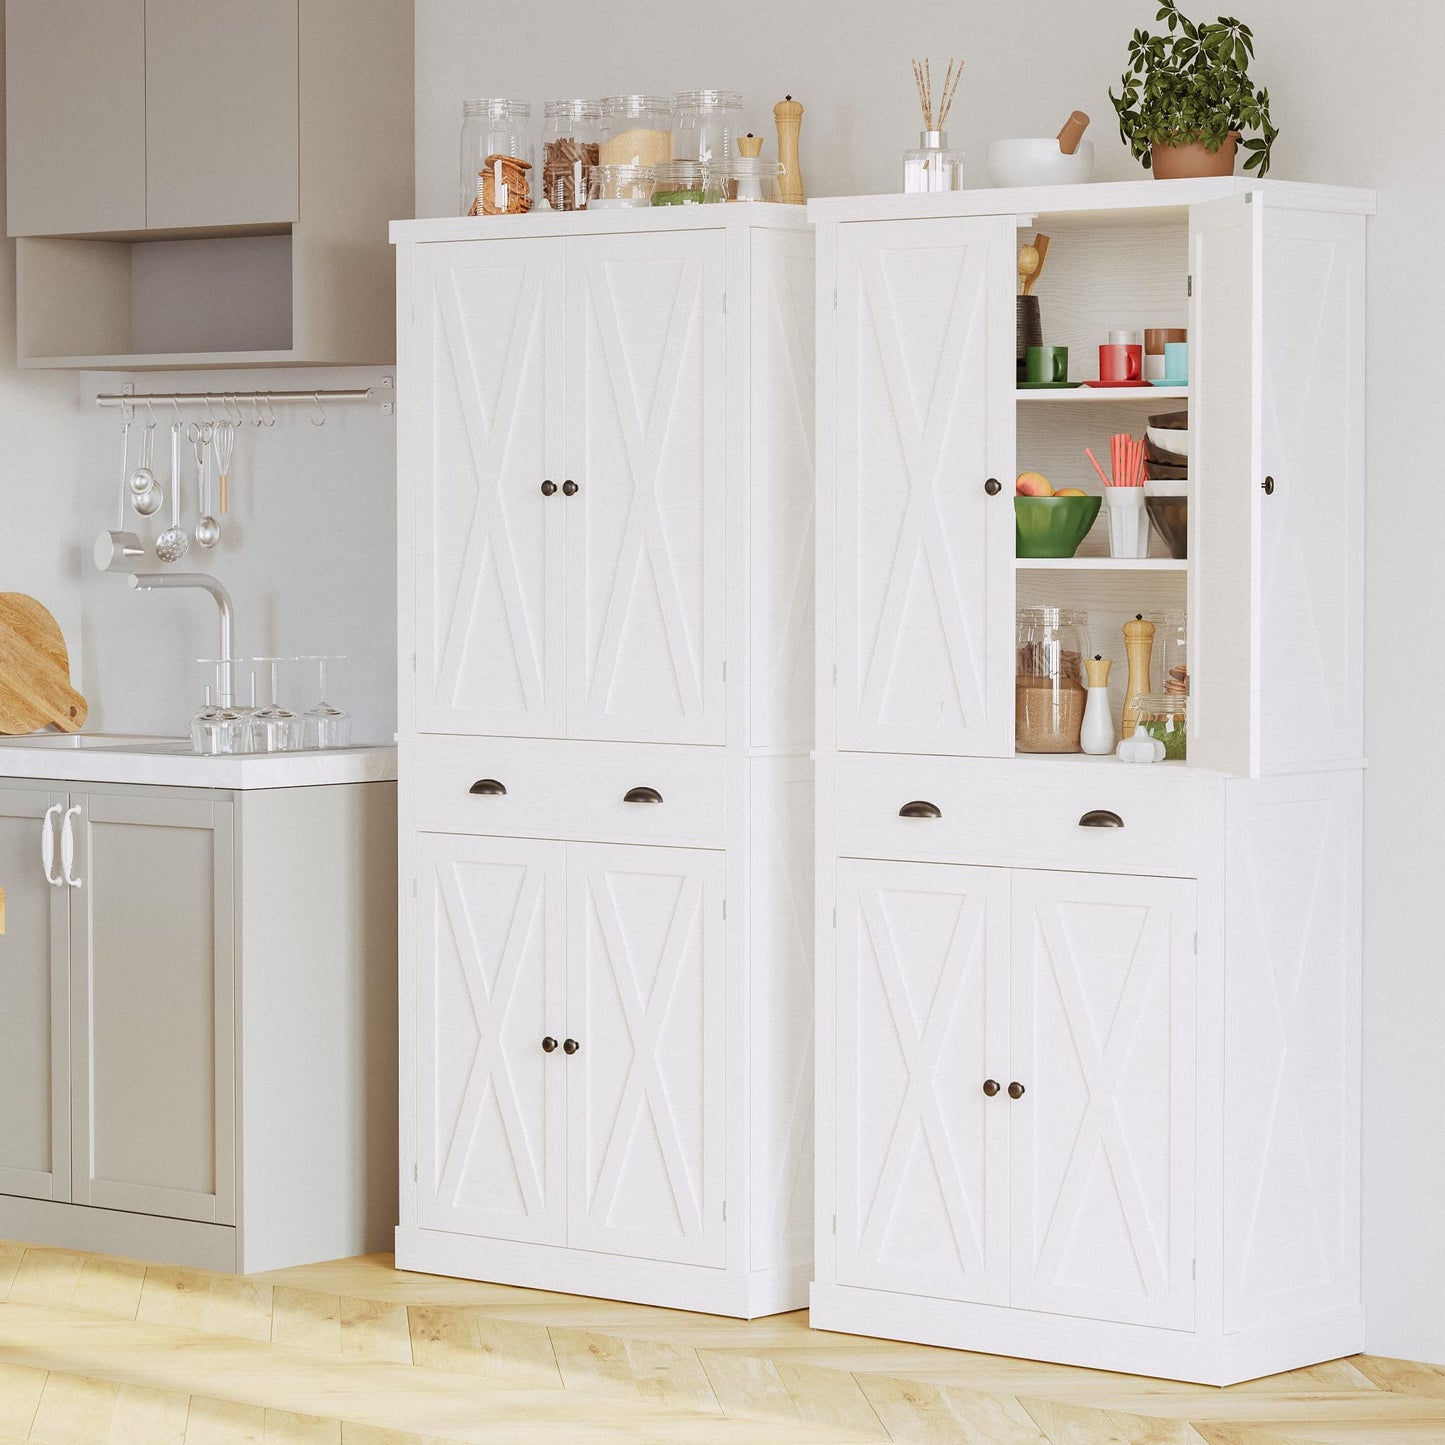 IRONCK Kitchen Pantry Storage Cabinet 72" Height, White, Barn Doors, Adjustable Shelves